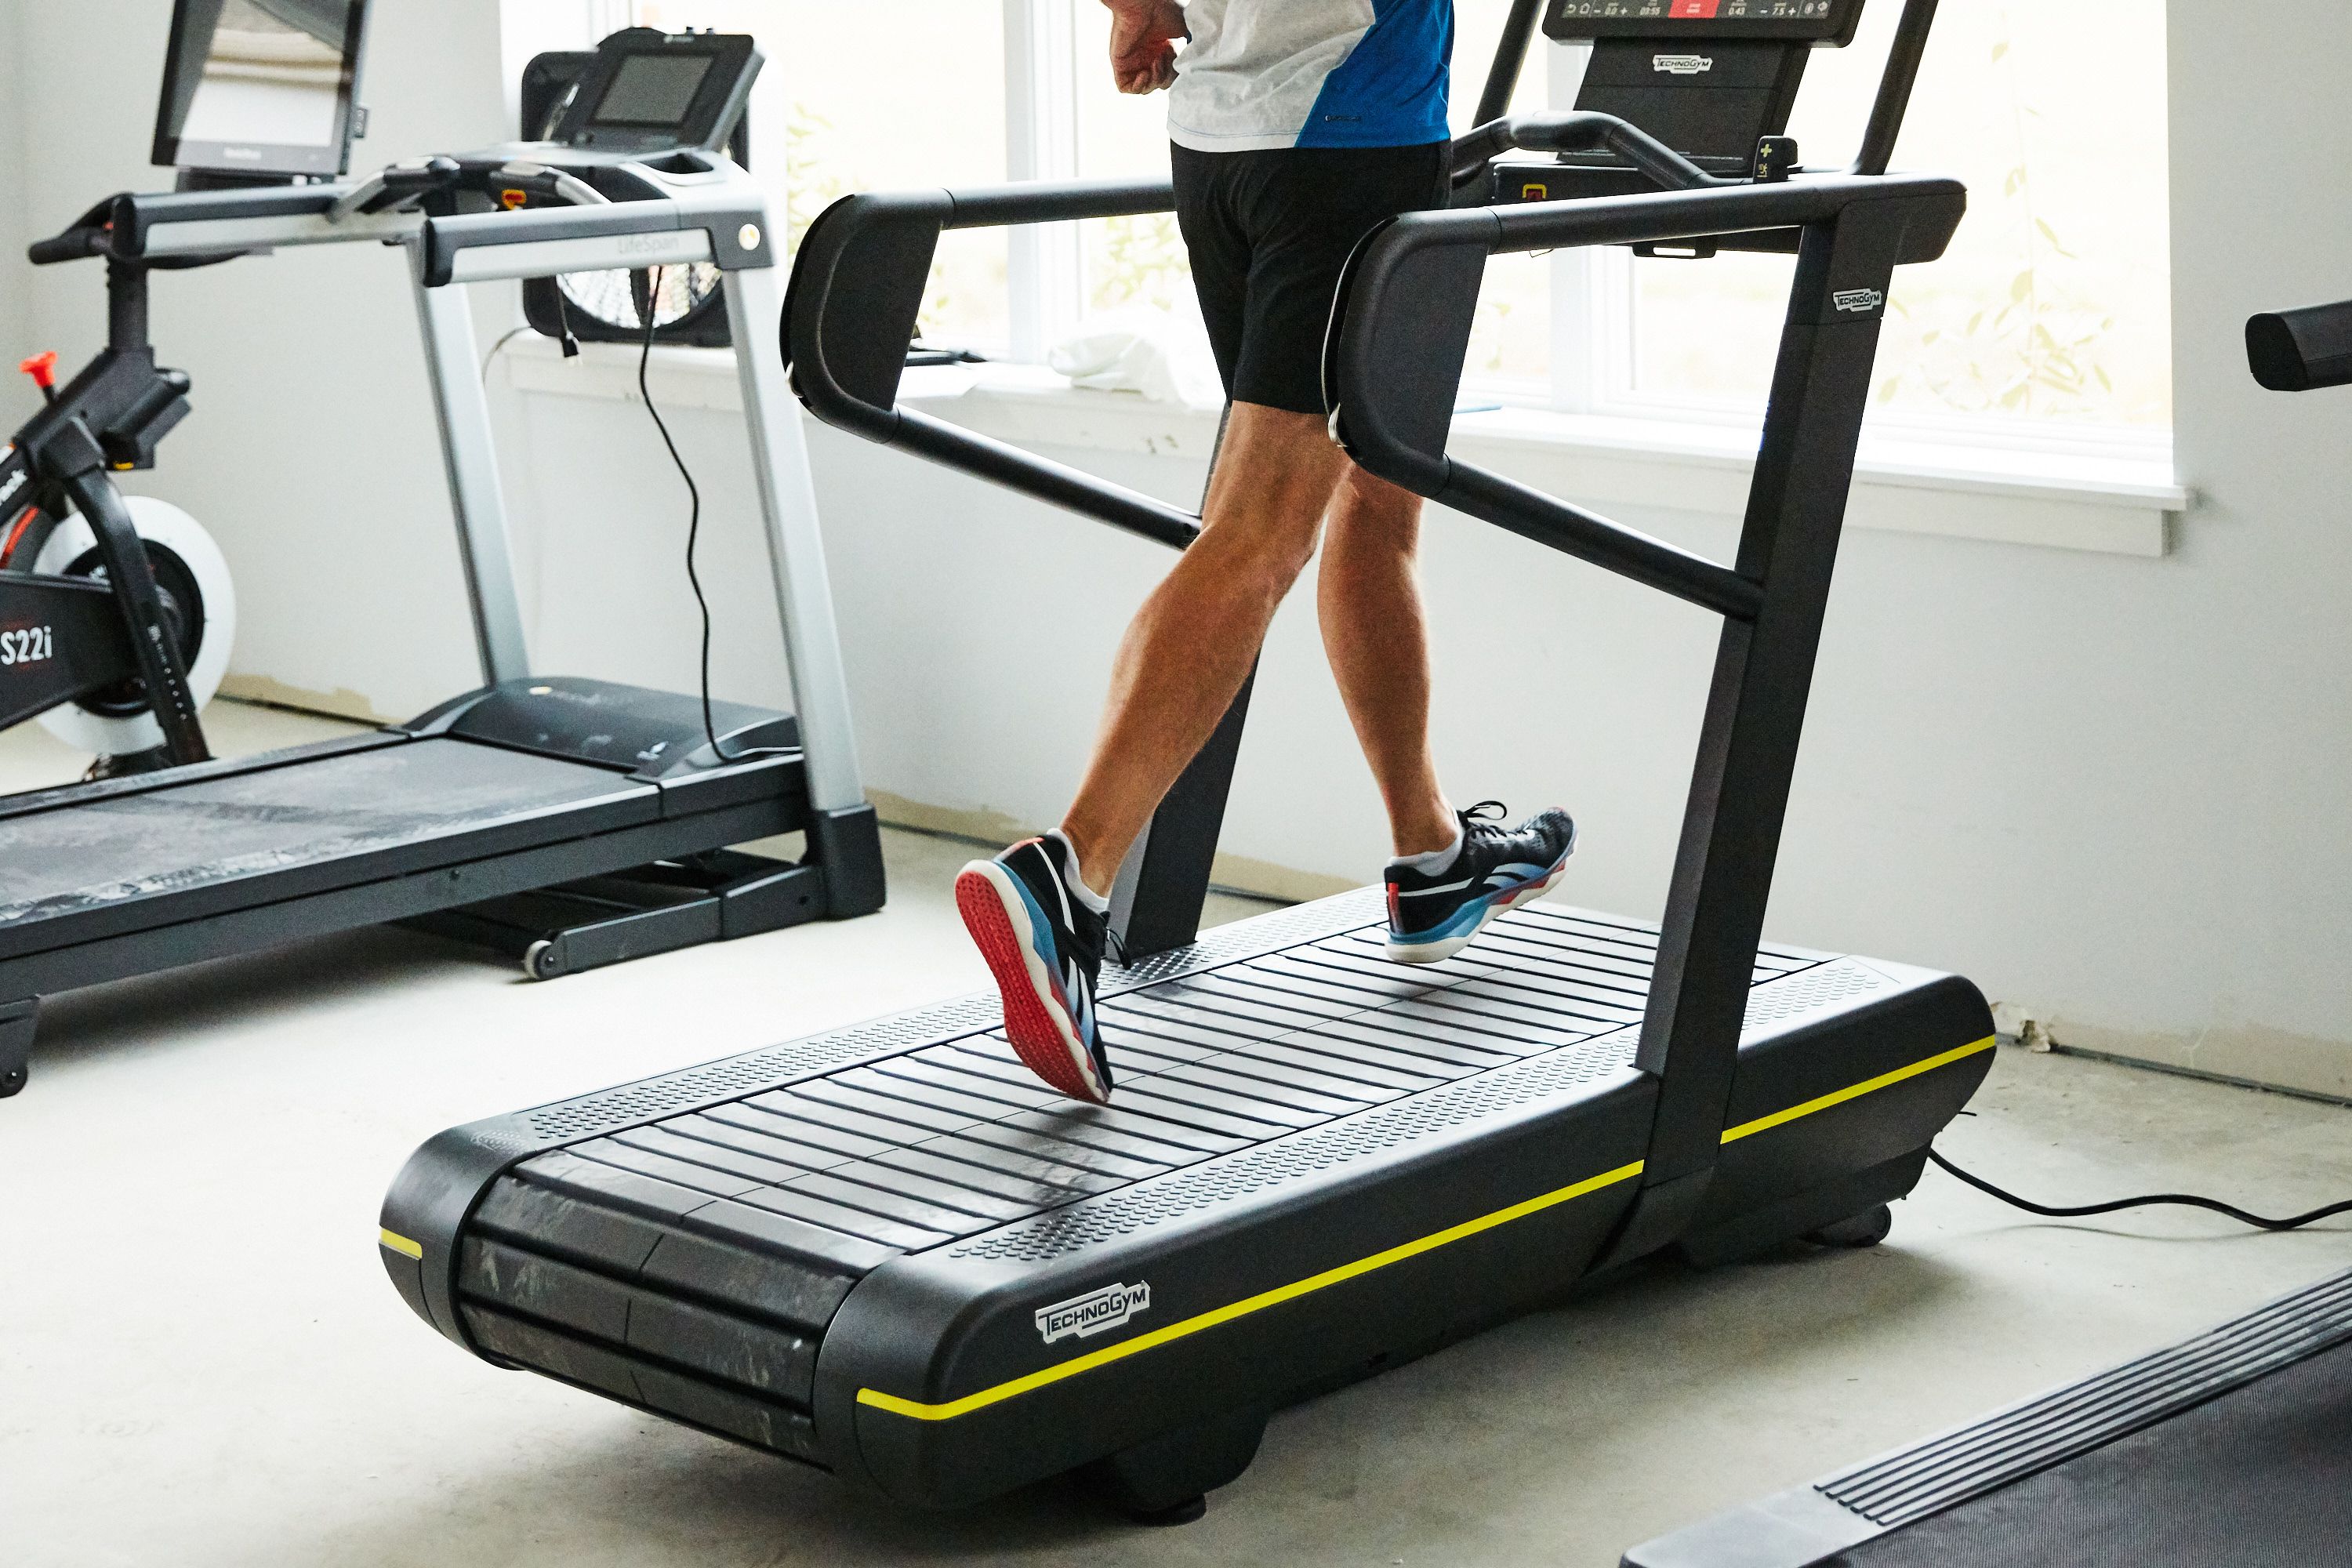 can 'running app be used on treadmill